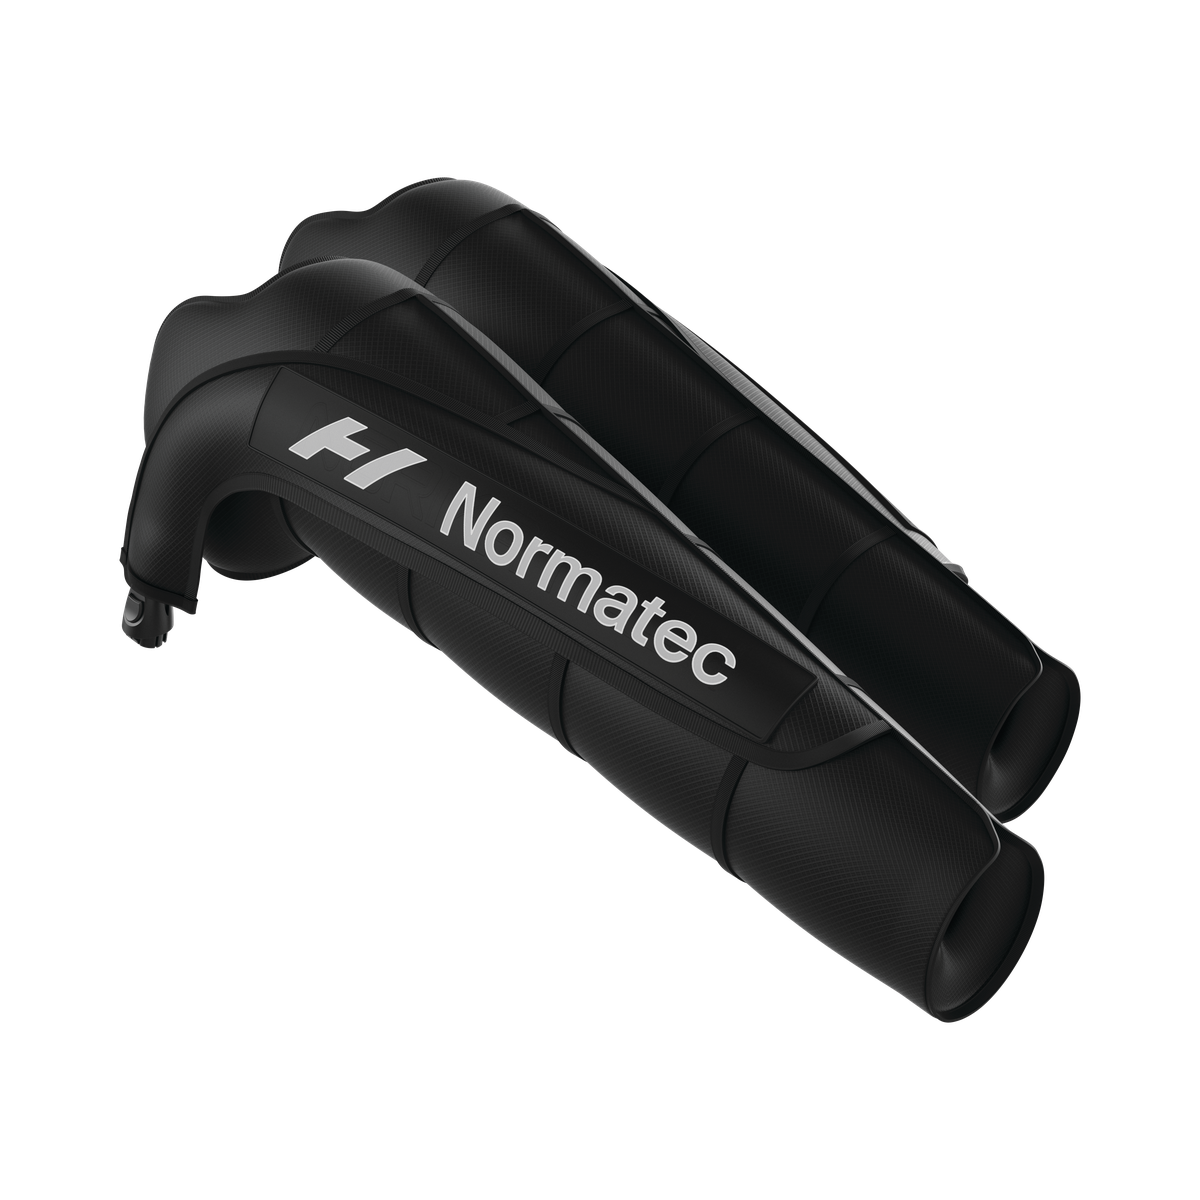 Hyperice Normatec 3 Arm Attachment - Pair - Helse og personlig pleie